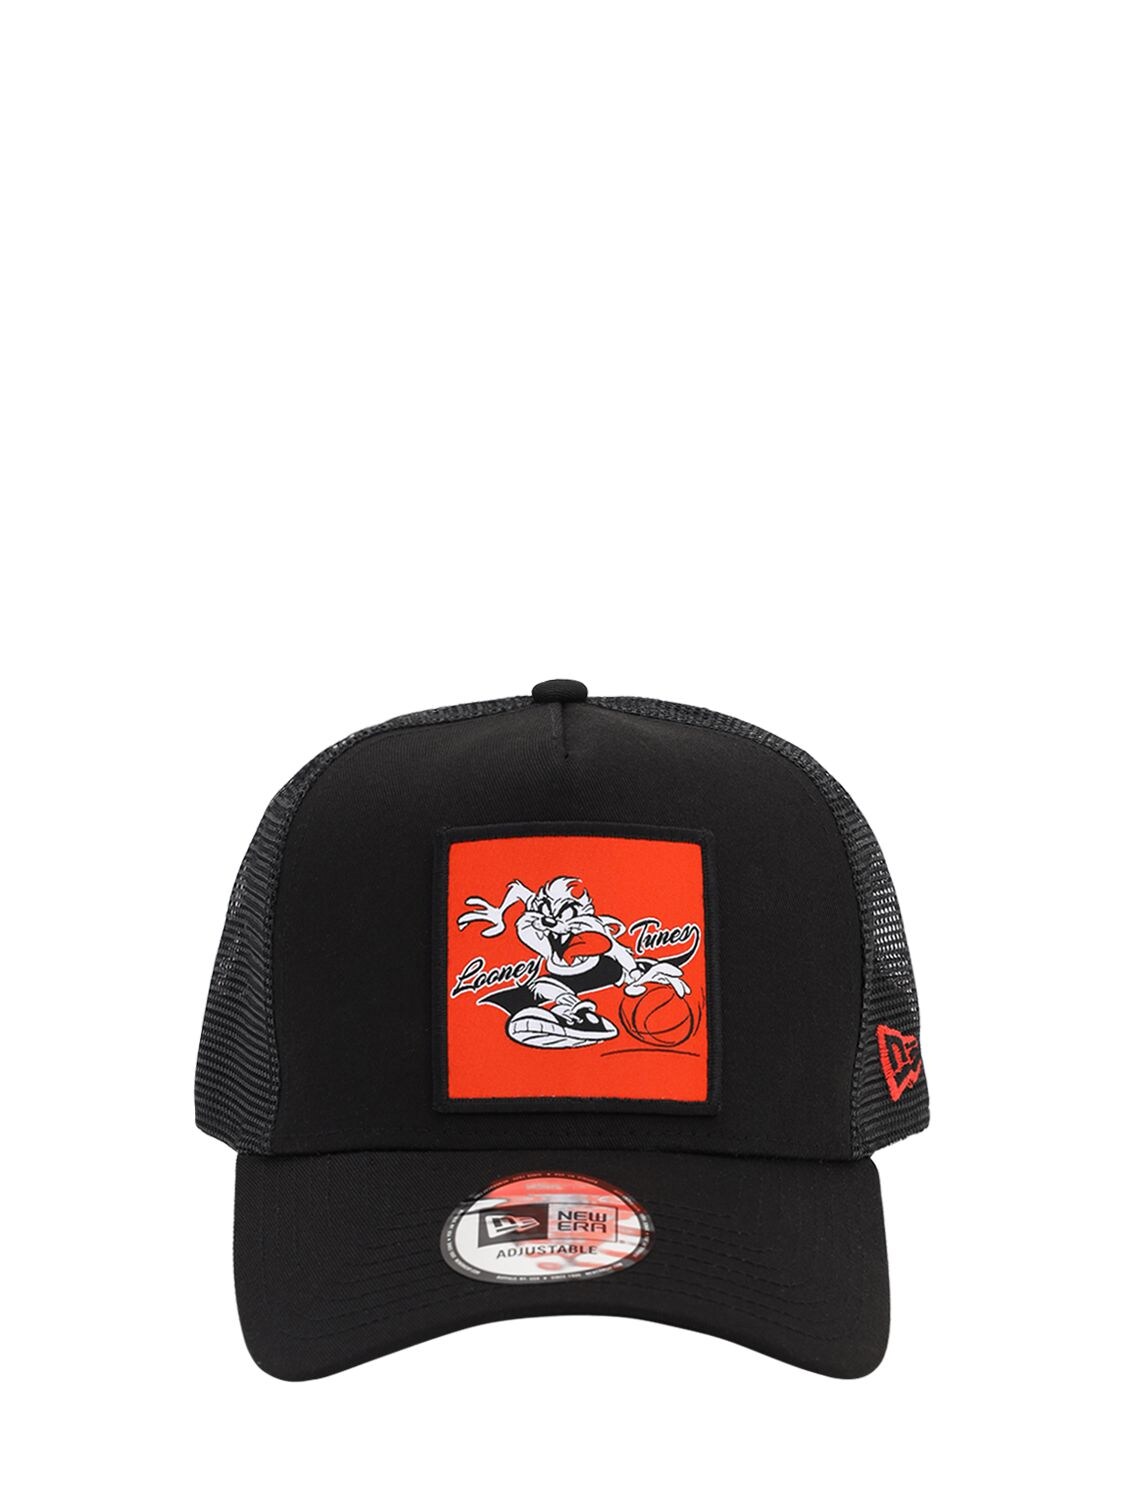 New Era Q3 Looney Tunes Baseball Hat In Black